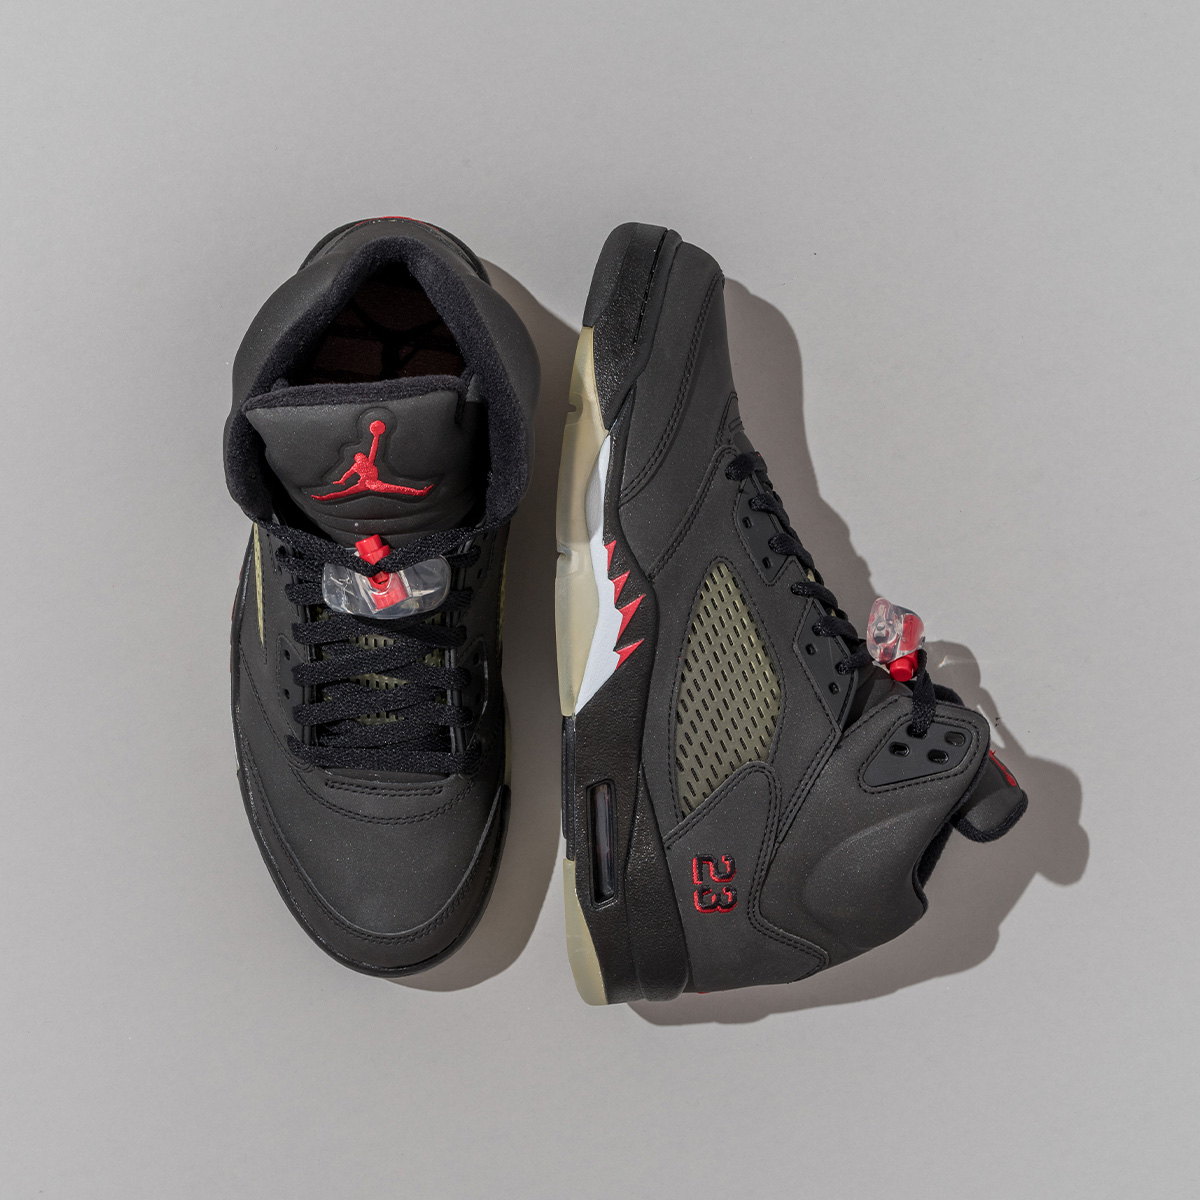 brad-hogan-jordan-sneaker-collection-01 2